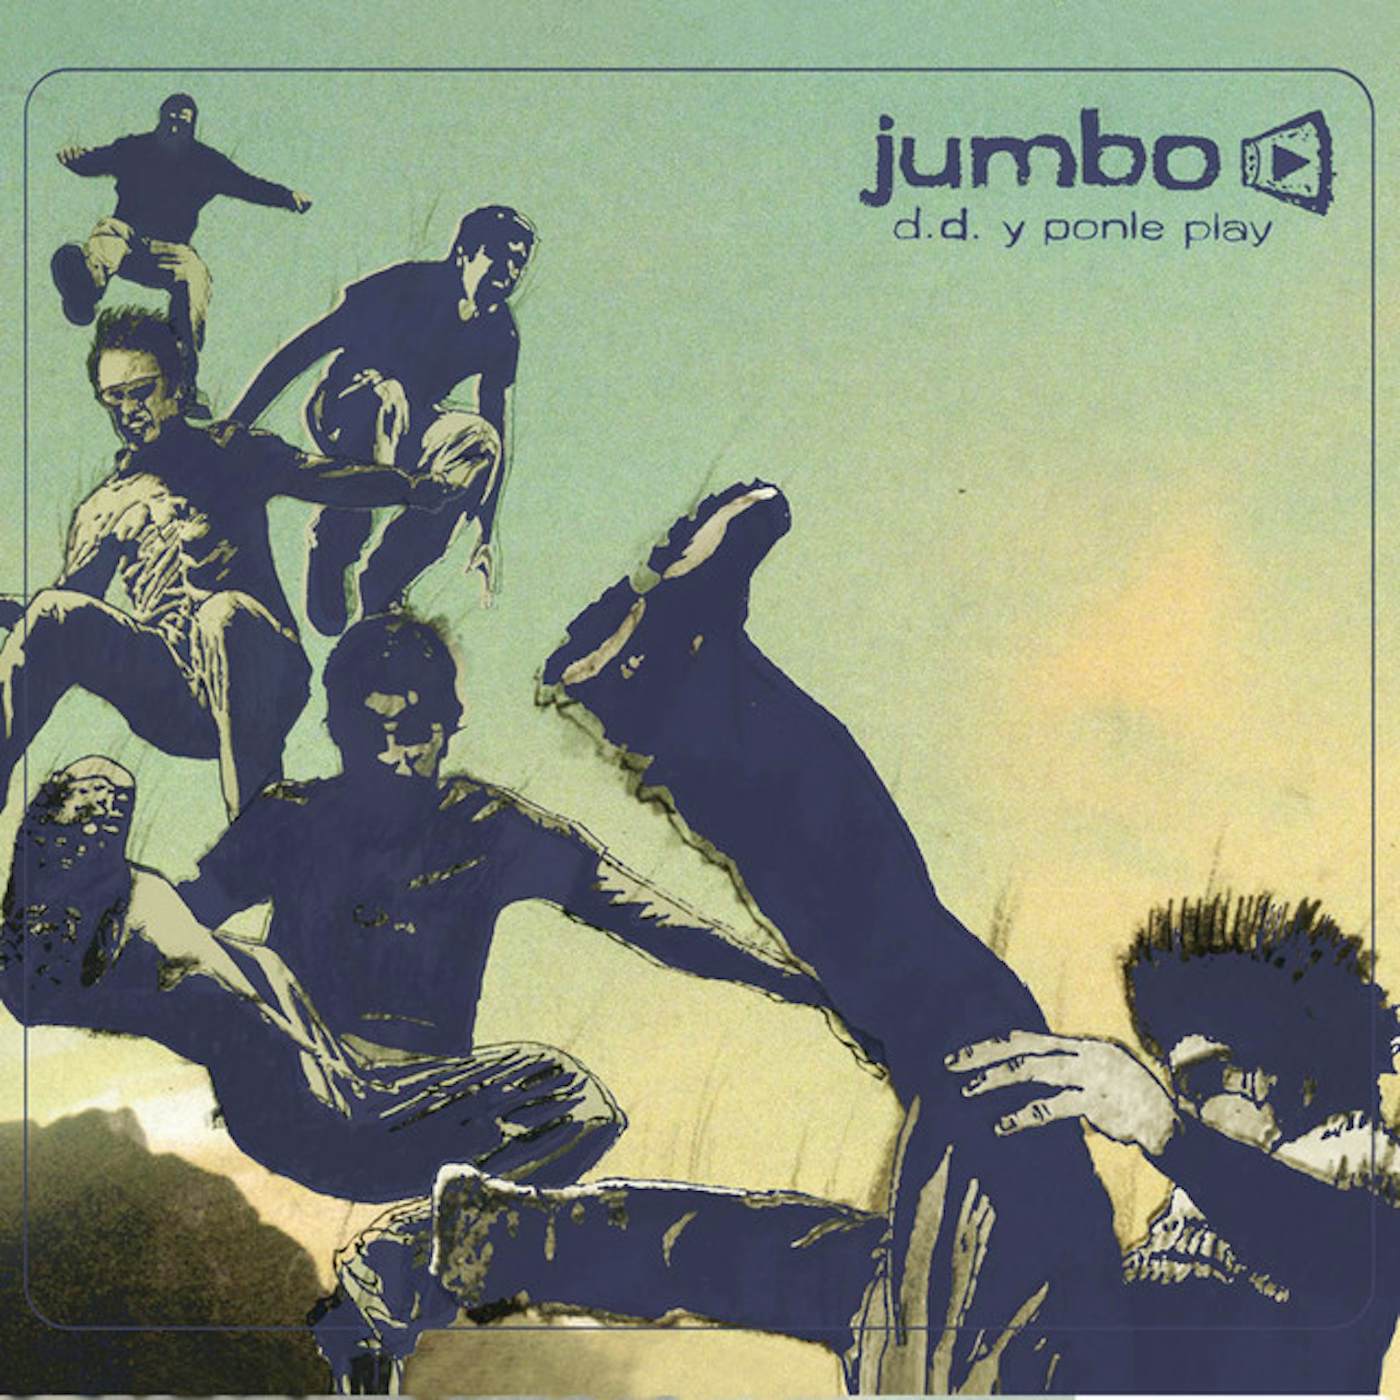 Jumbo D.D. Y Ponle Play Vinyl Record